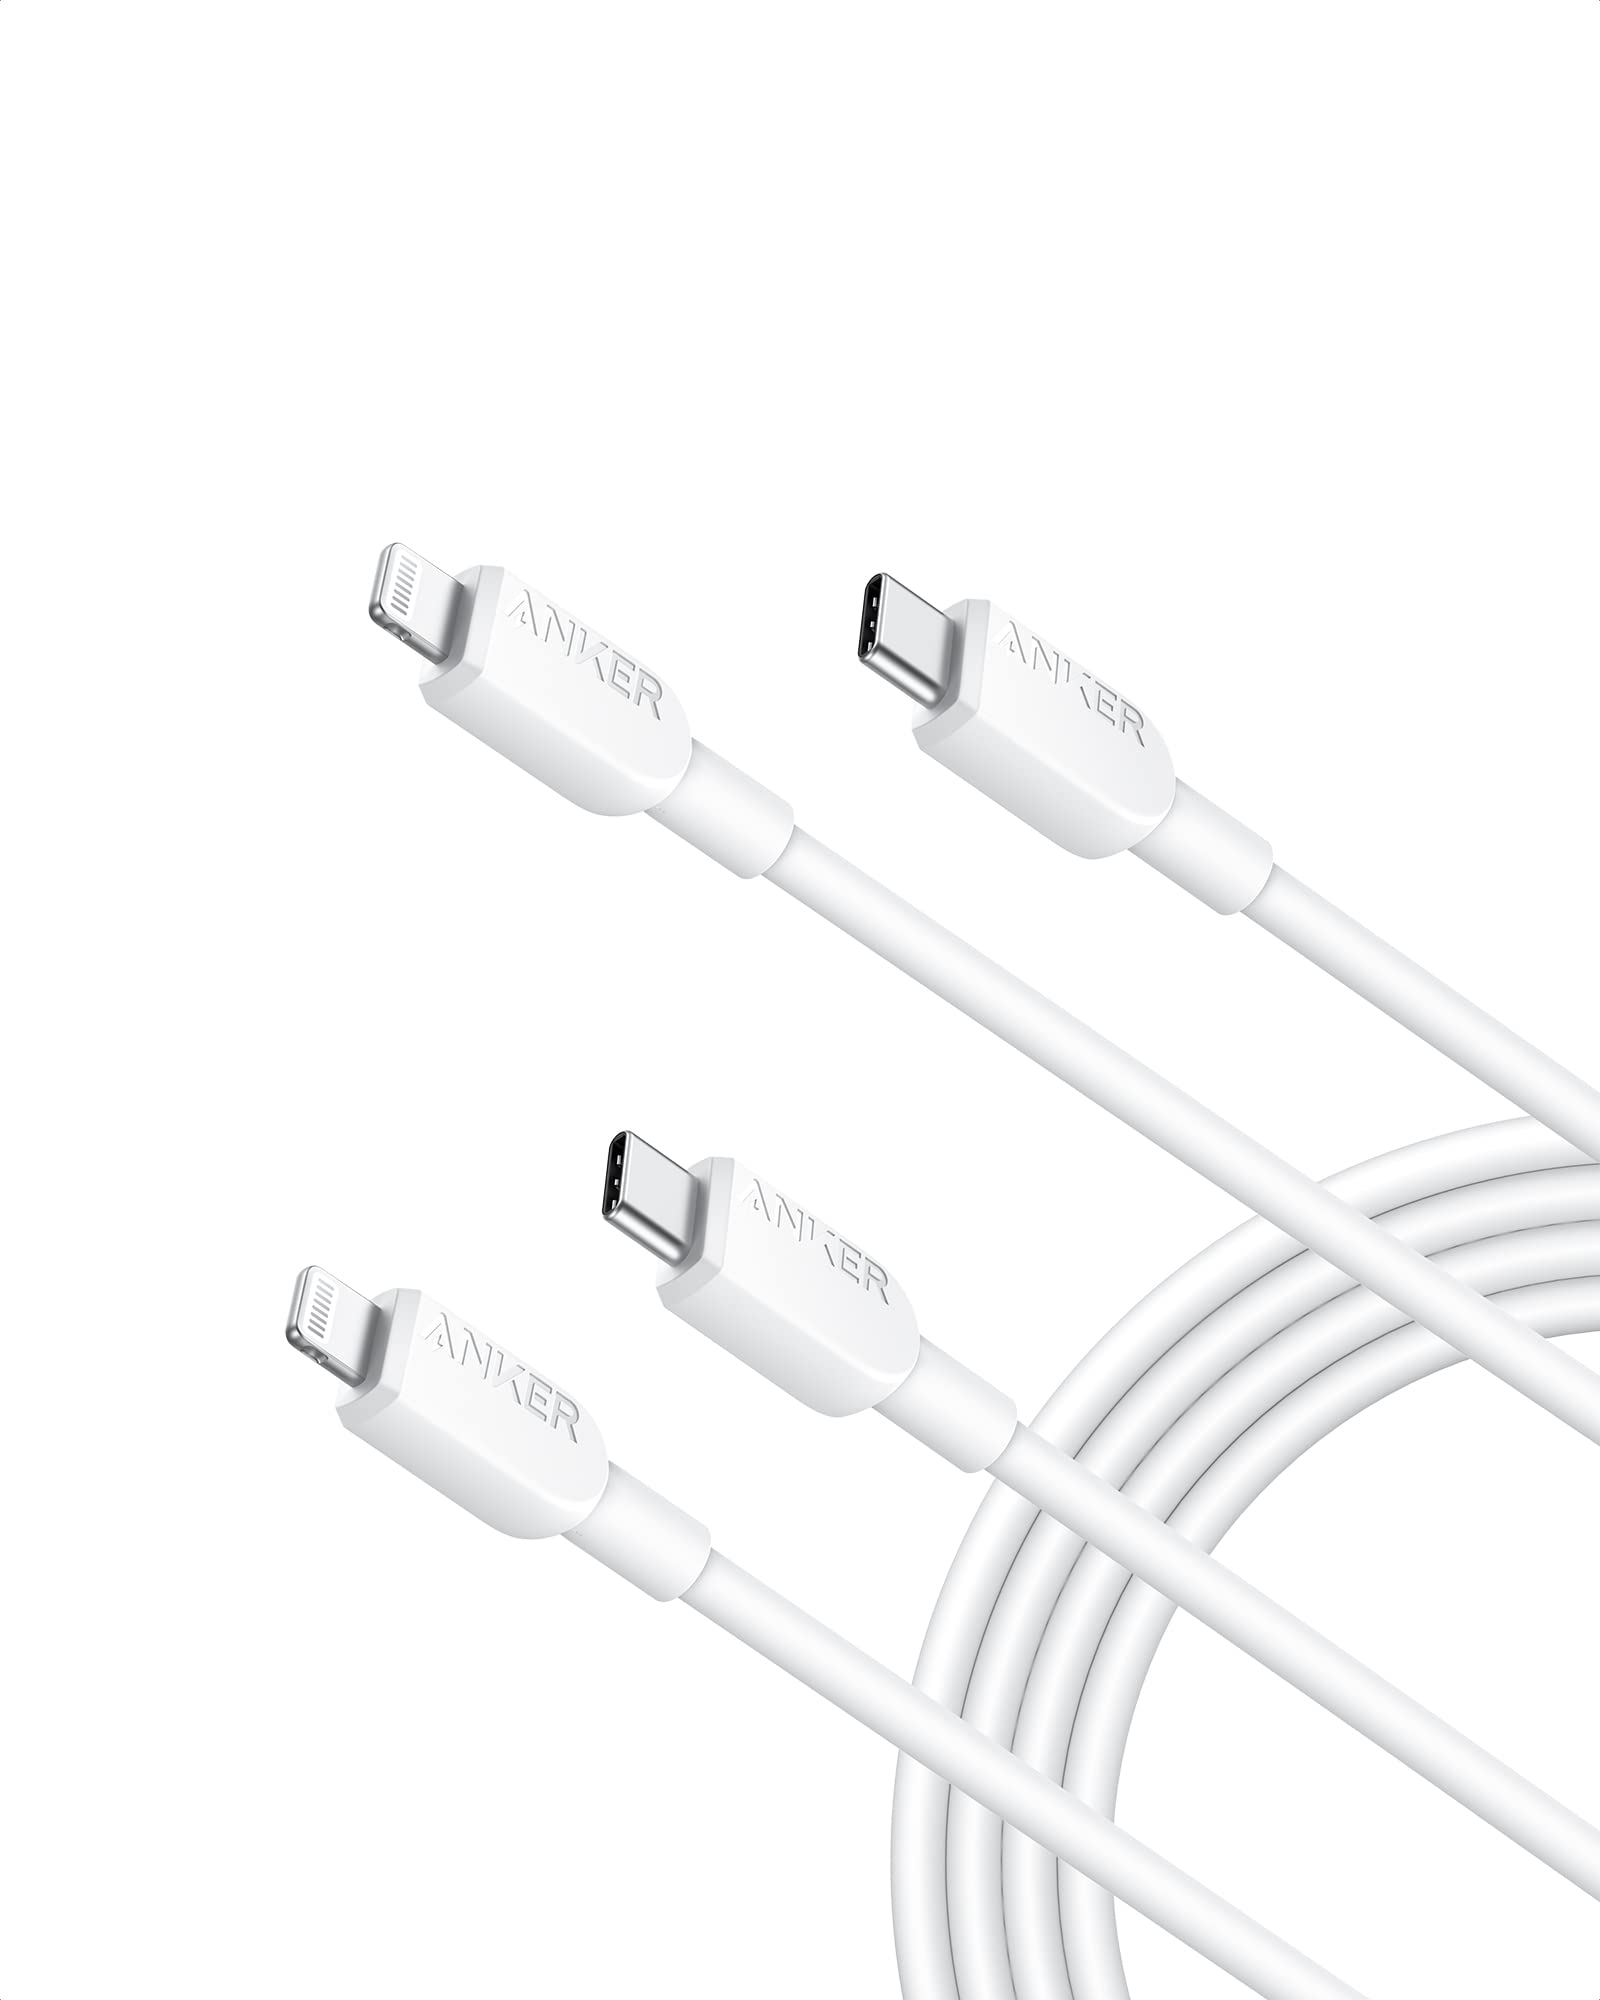 Anker <b>310</b> USB C to Lightning Cable (6 ft, White)